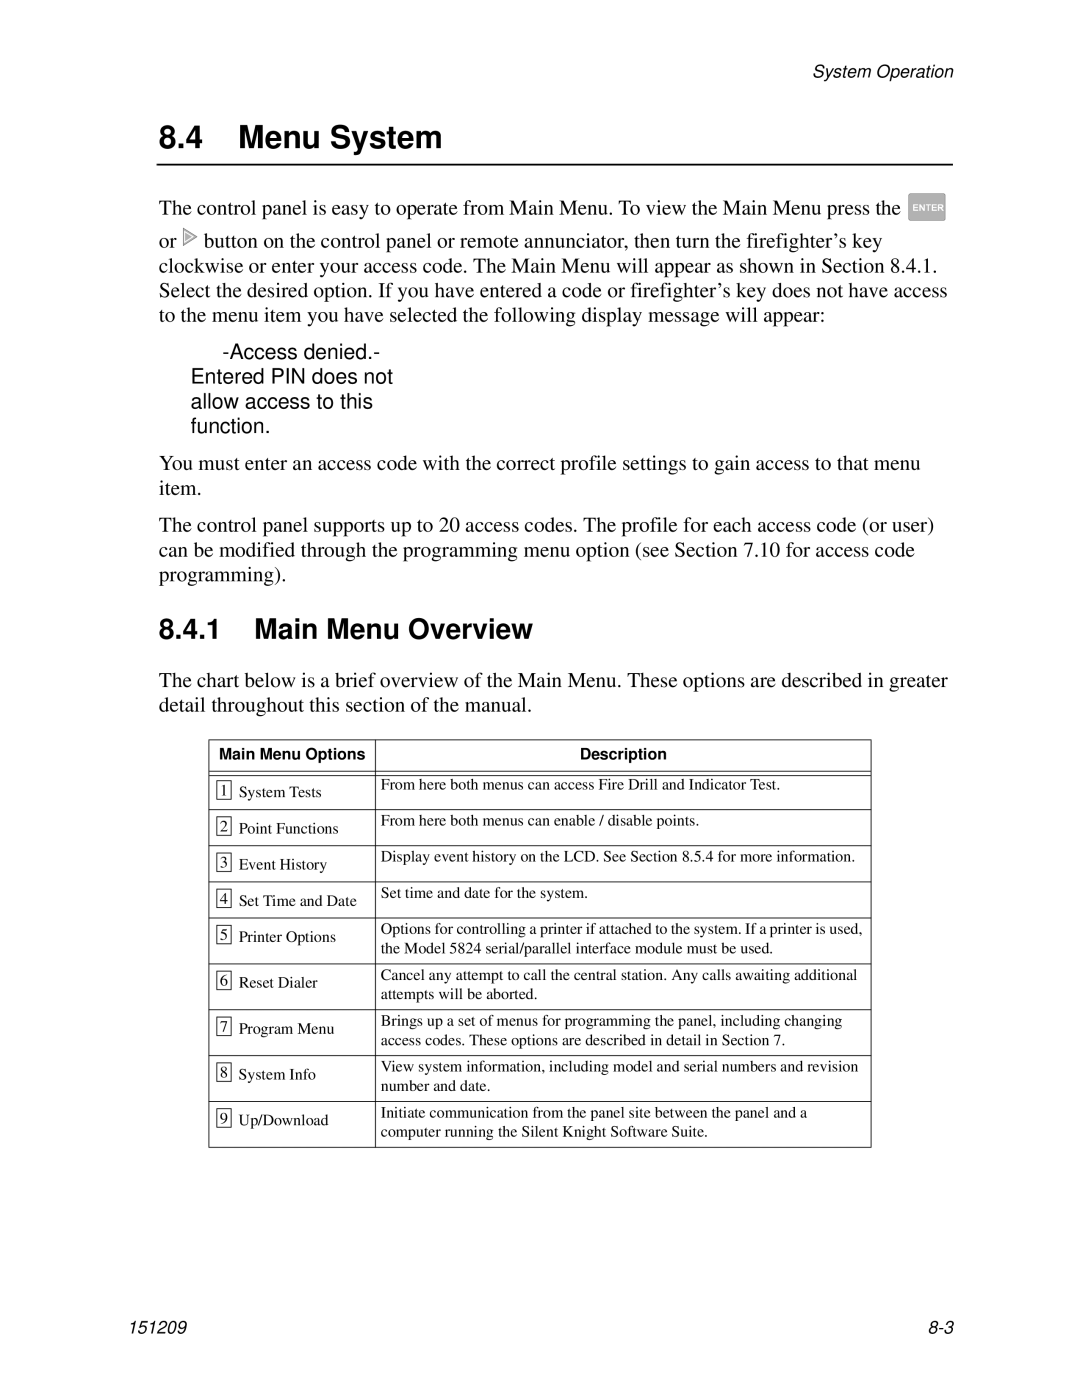 Honeywell 5820XL manual Menu System, Main Menu Overview, Main Menu Options Description 